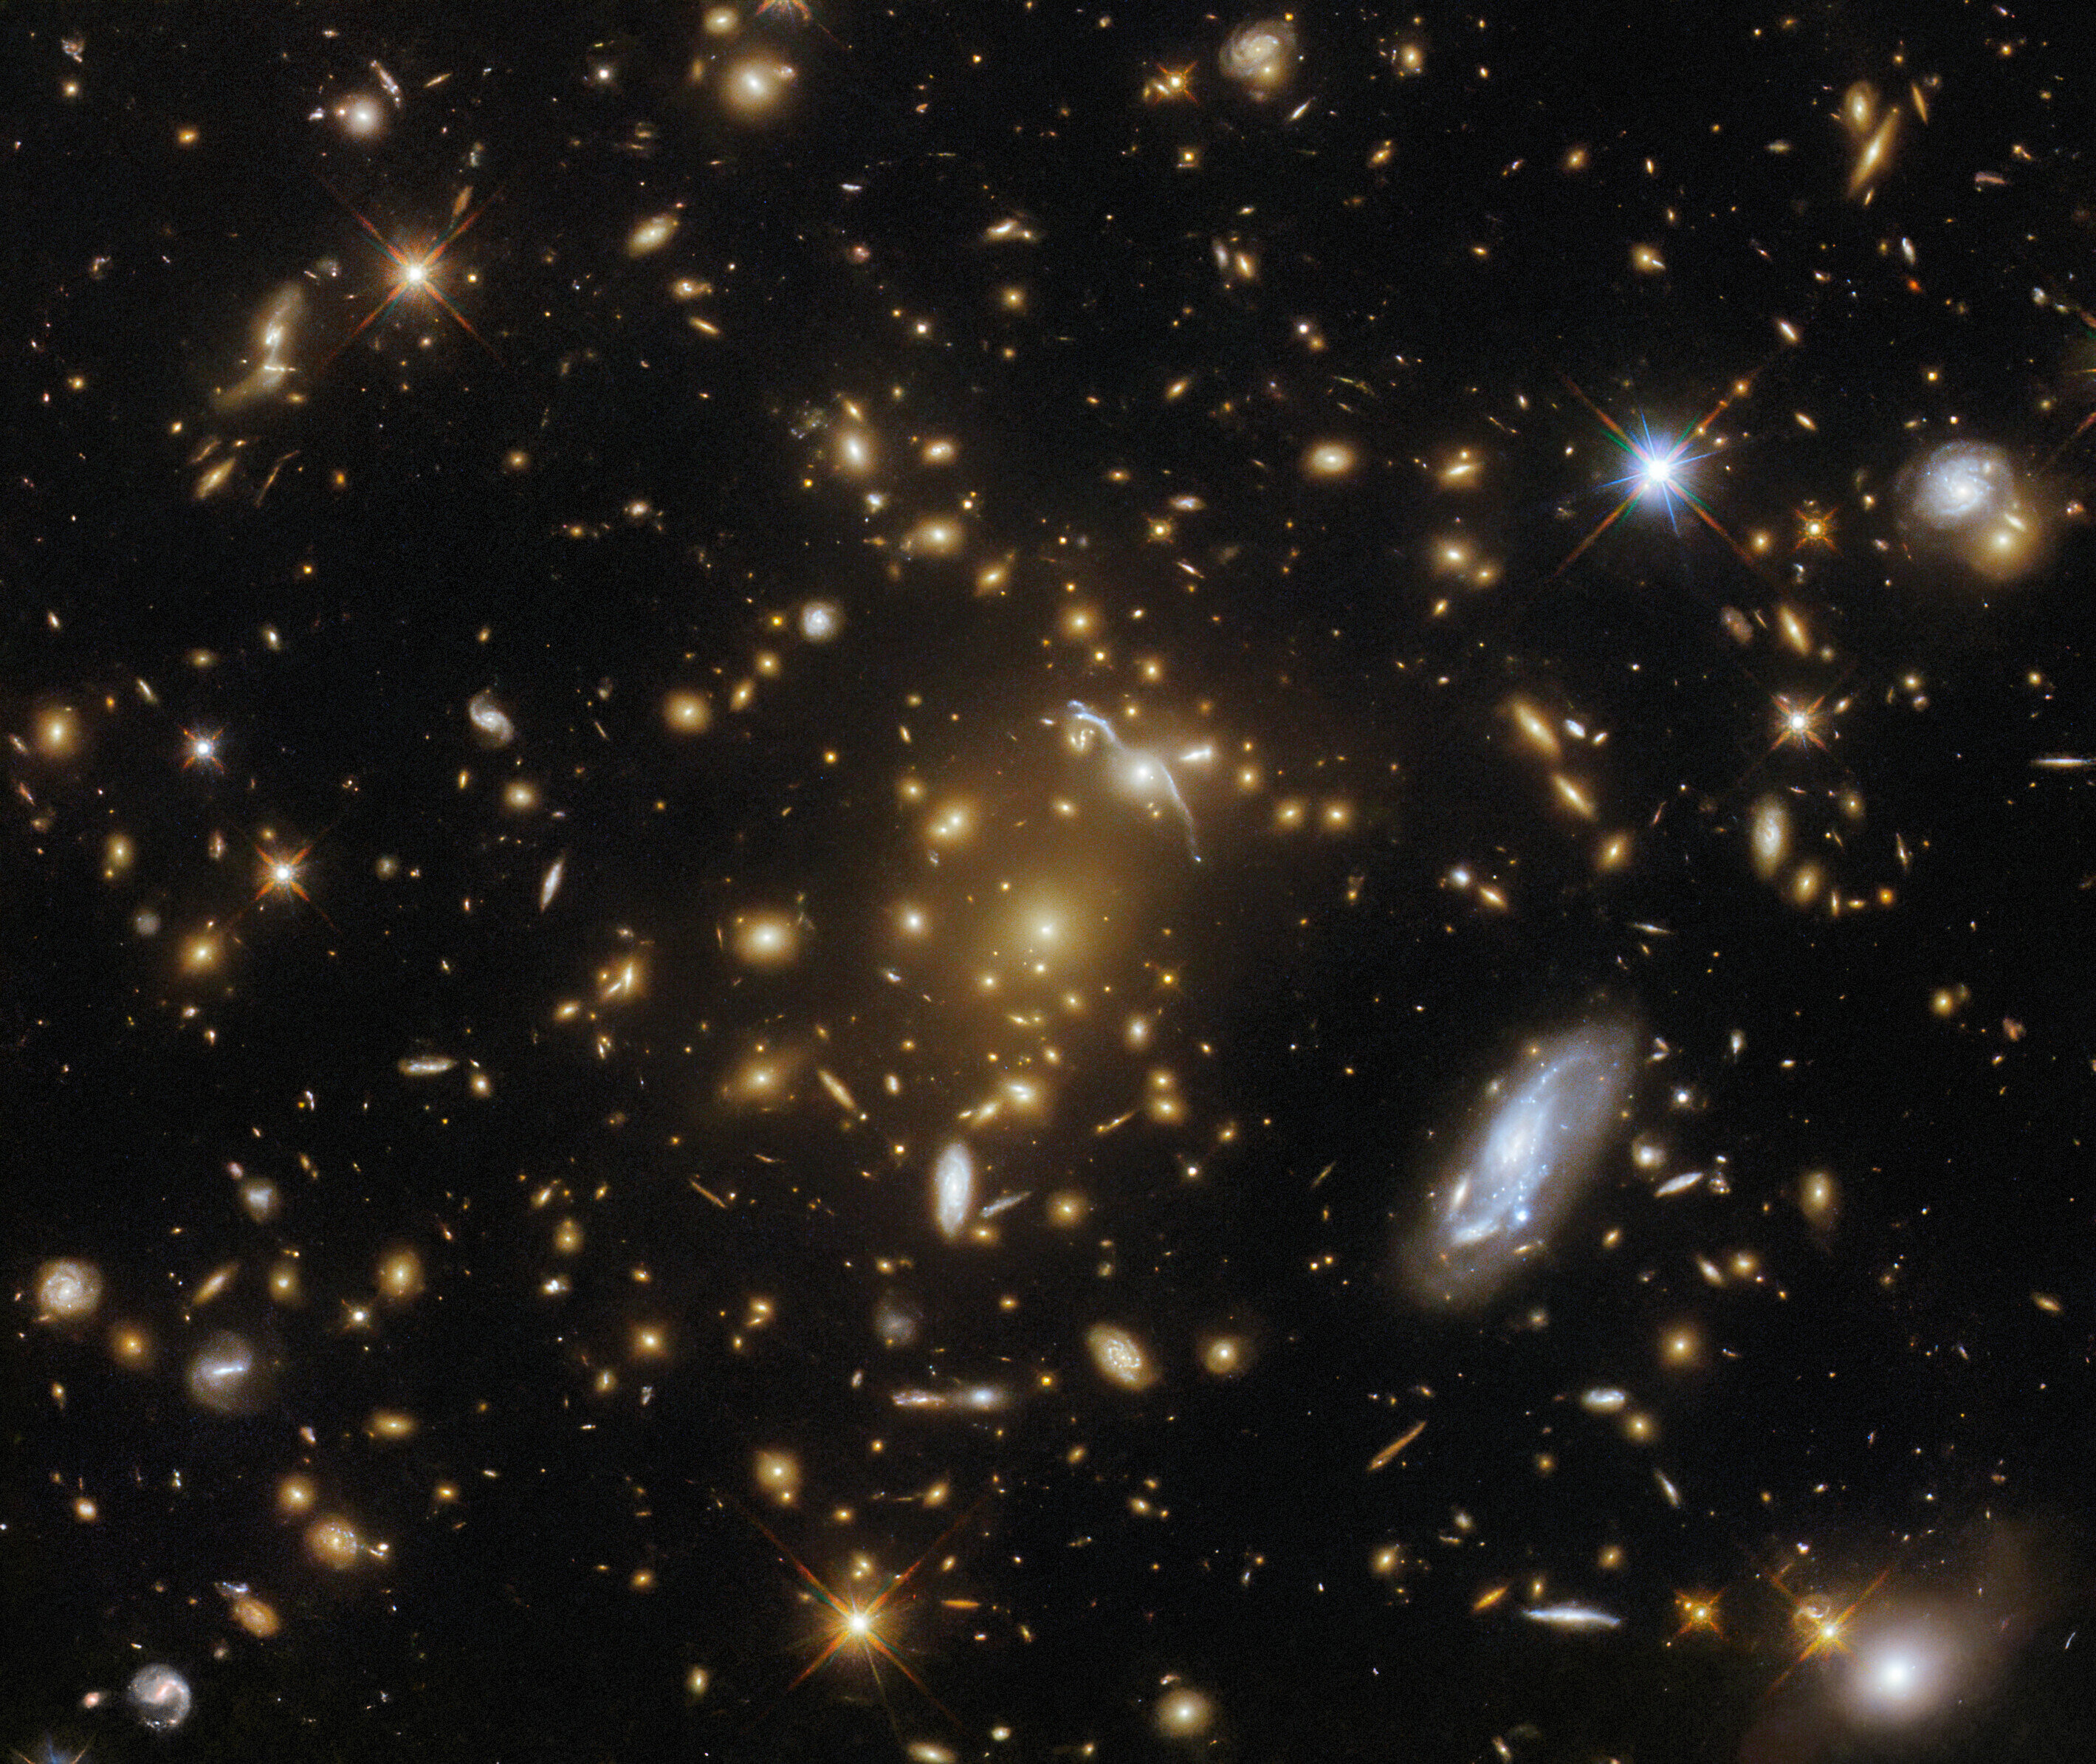 Hubble captures light-bending galaxy cluster eMACS J1823.1+7822